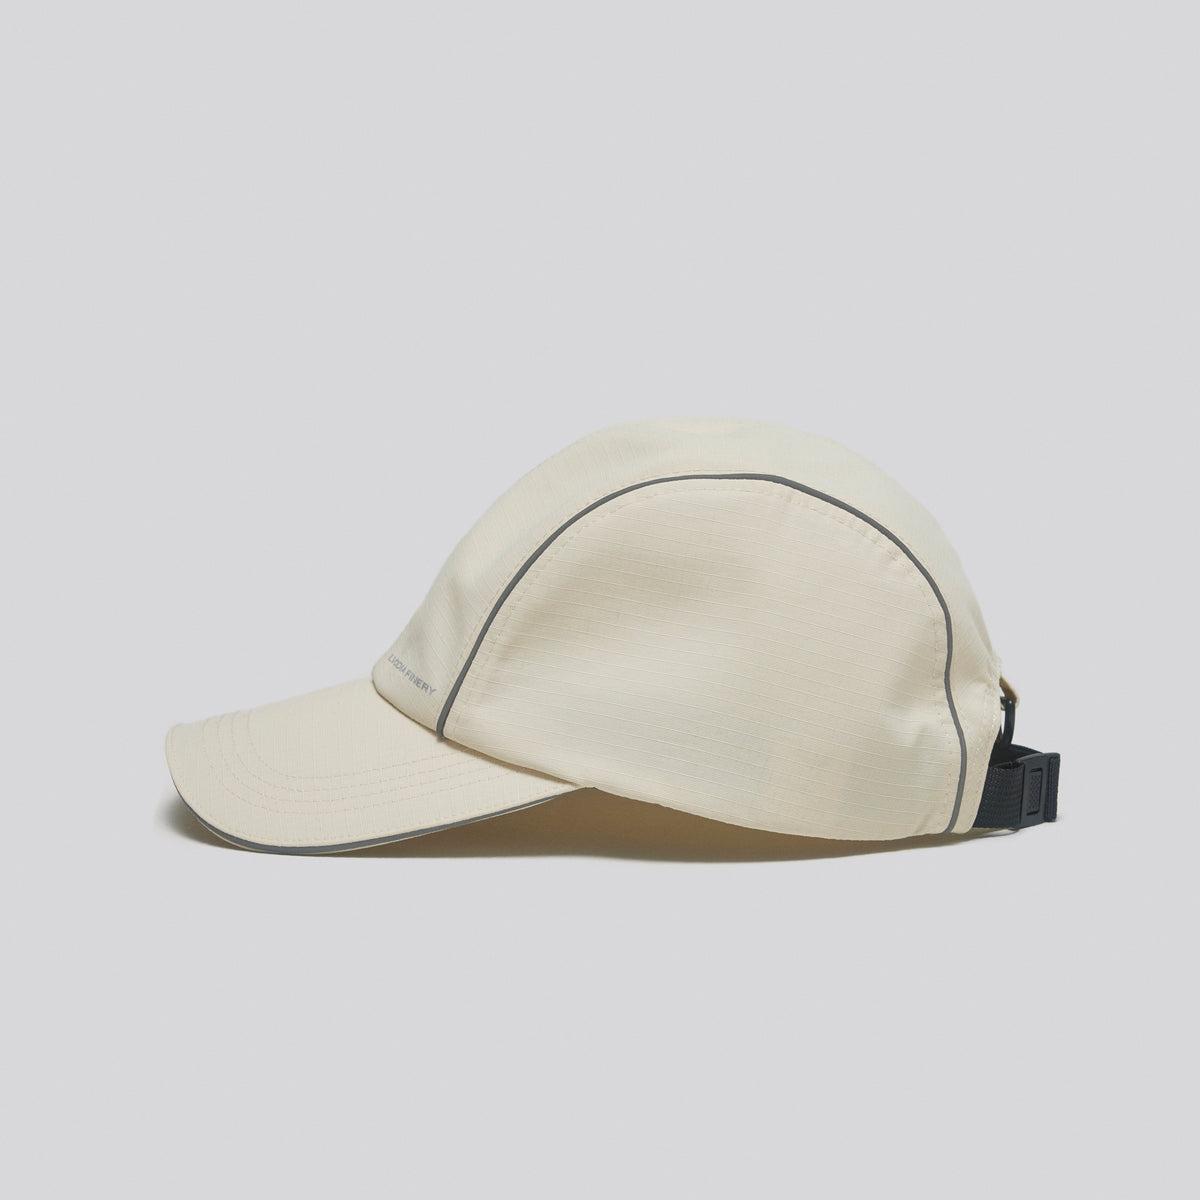 Ripstop Nylon Reflective Hat